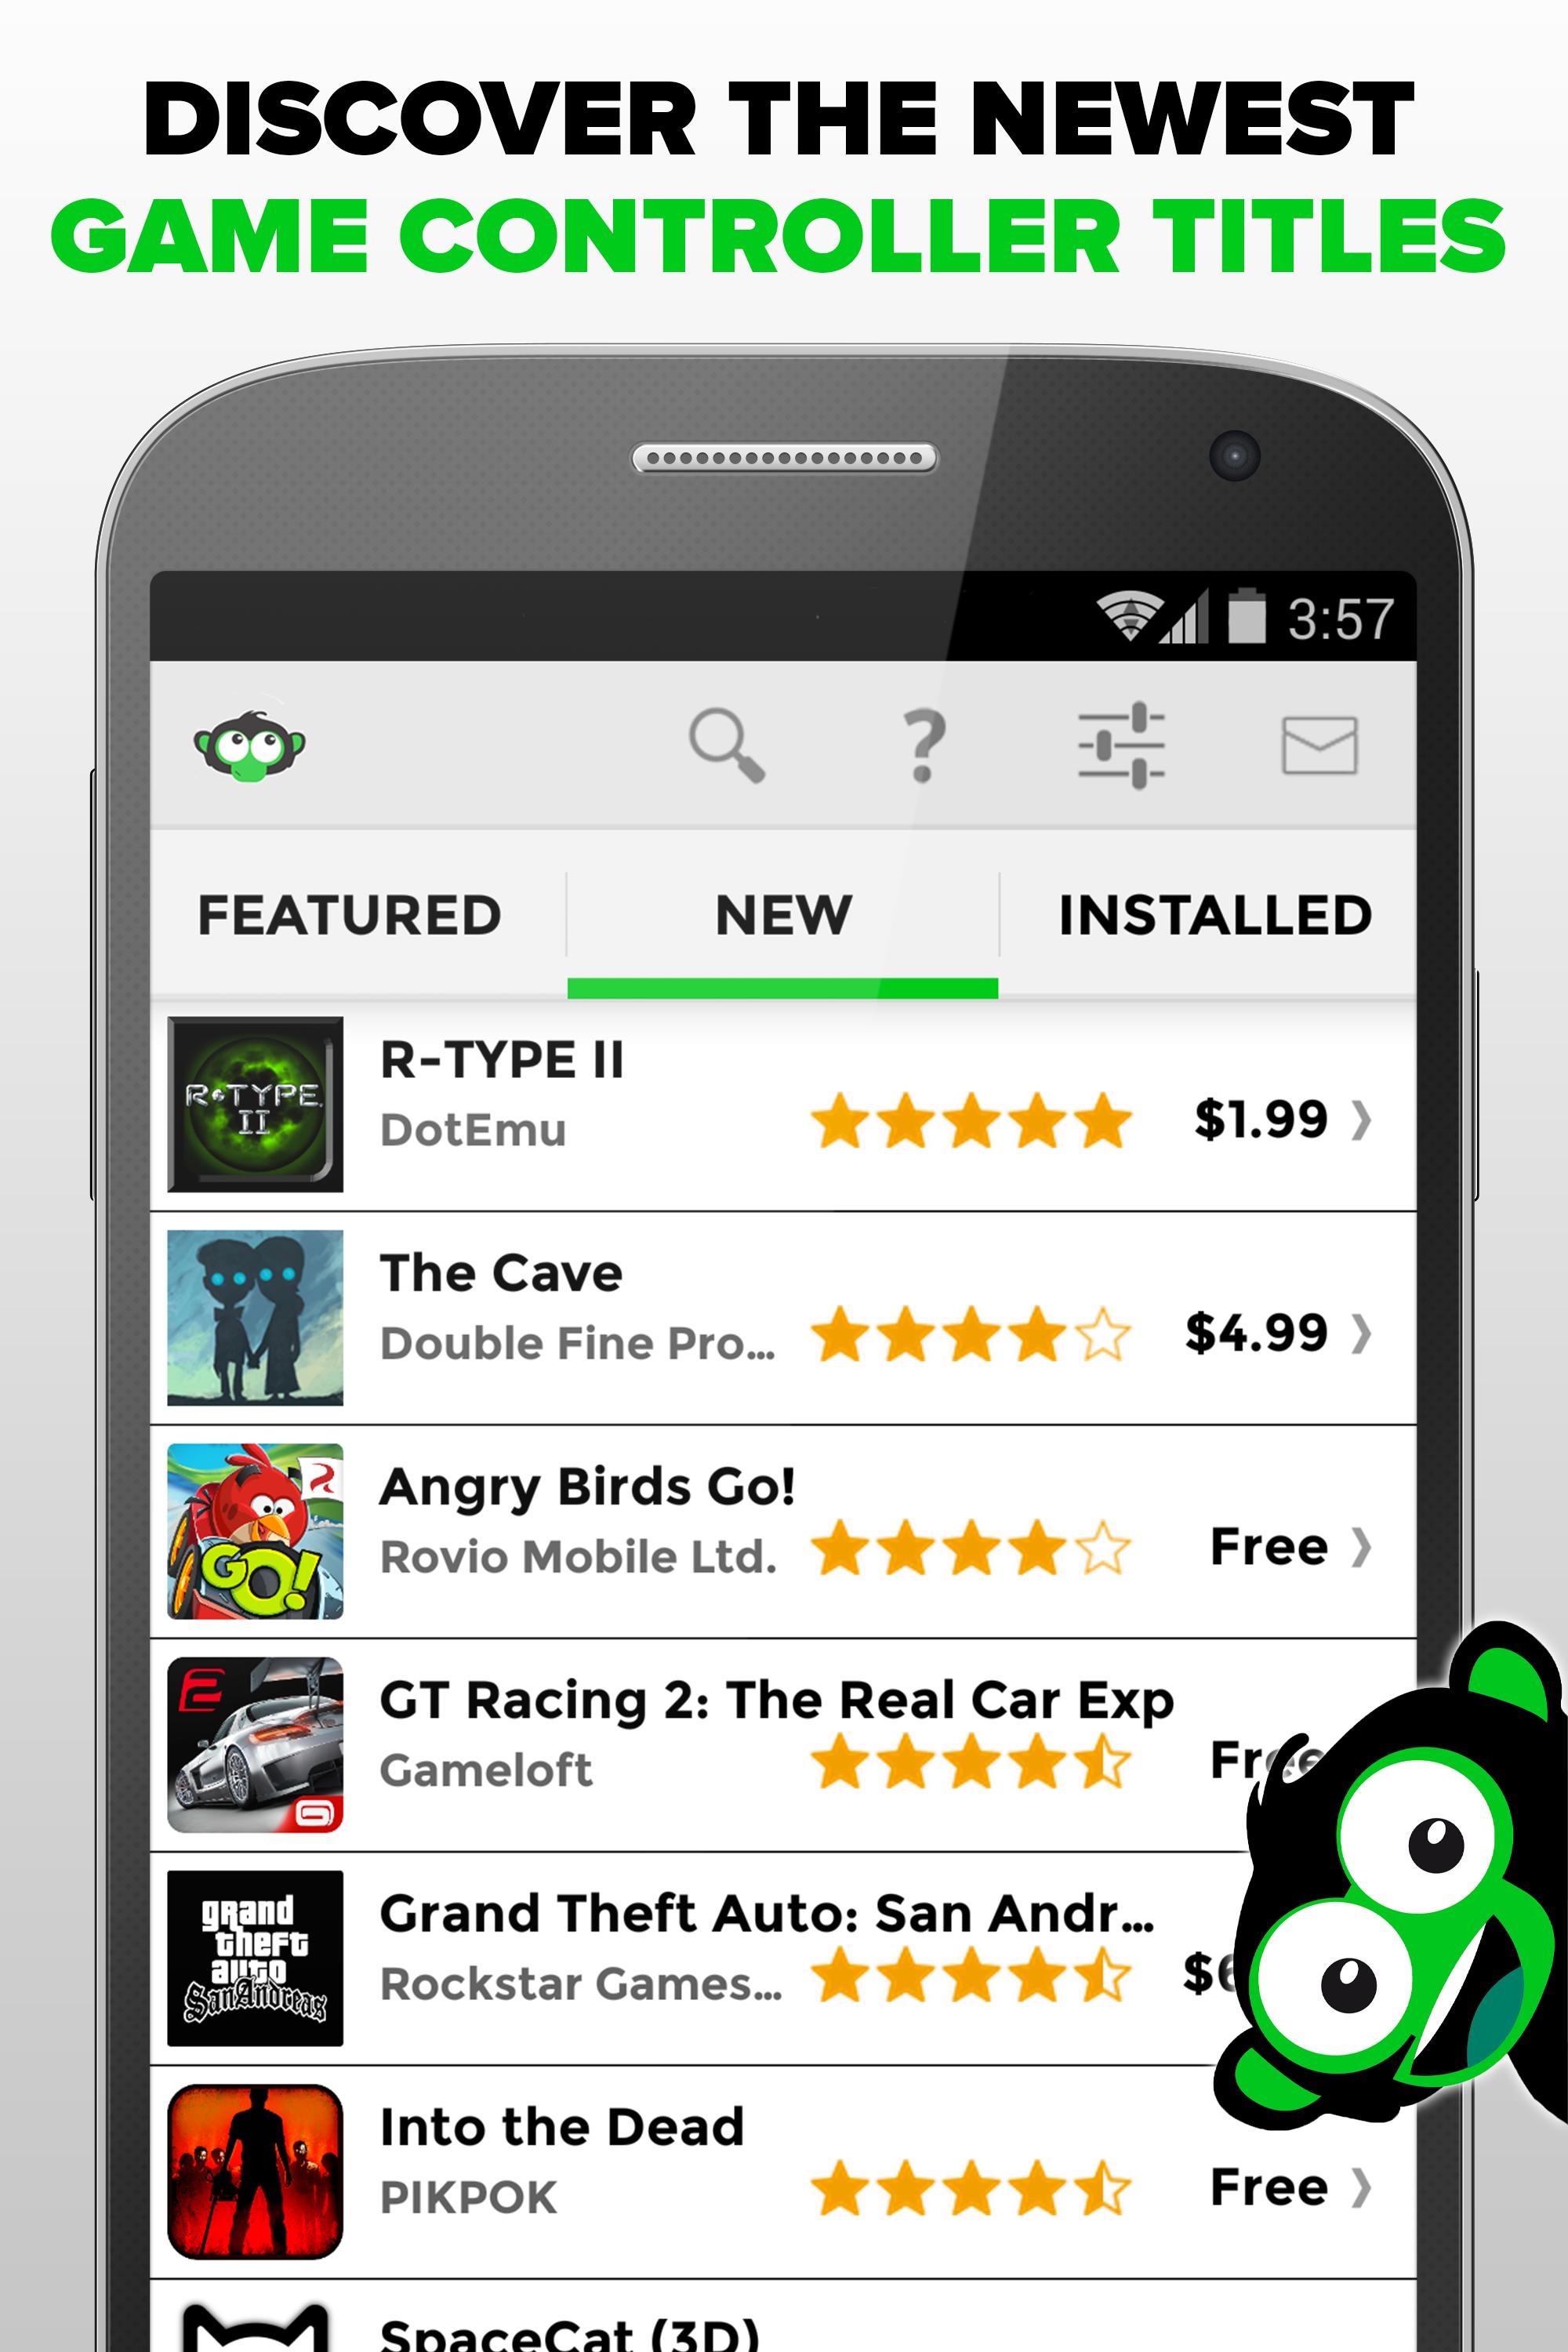 Feature titles. Games list приложение Android. Лучшие игры для геймпада АПК. Игры под андроид геймпад список. Game list.